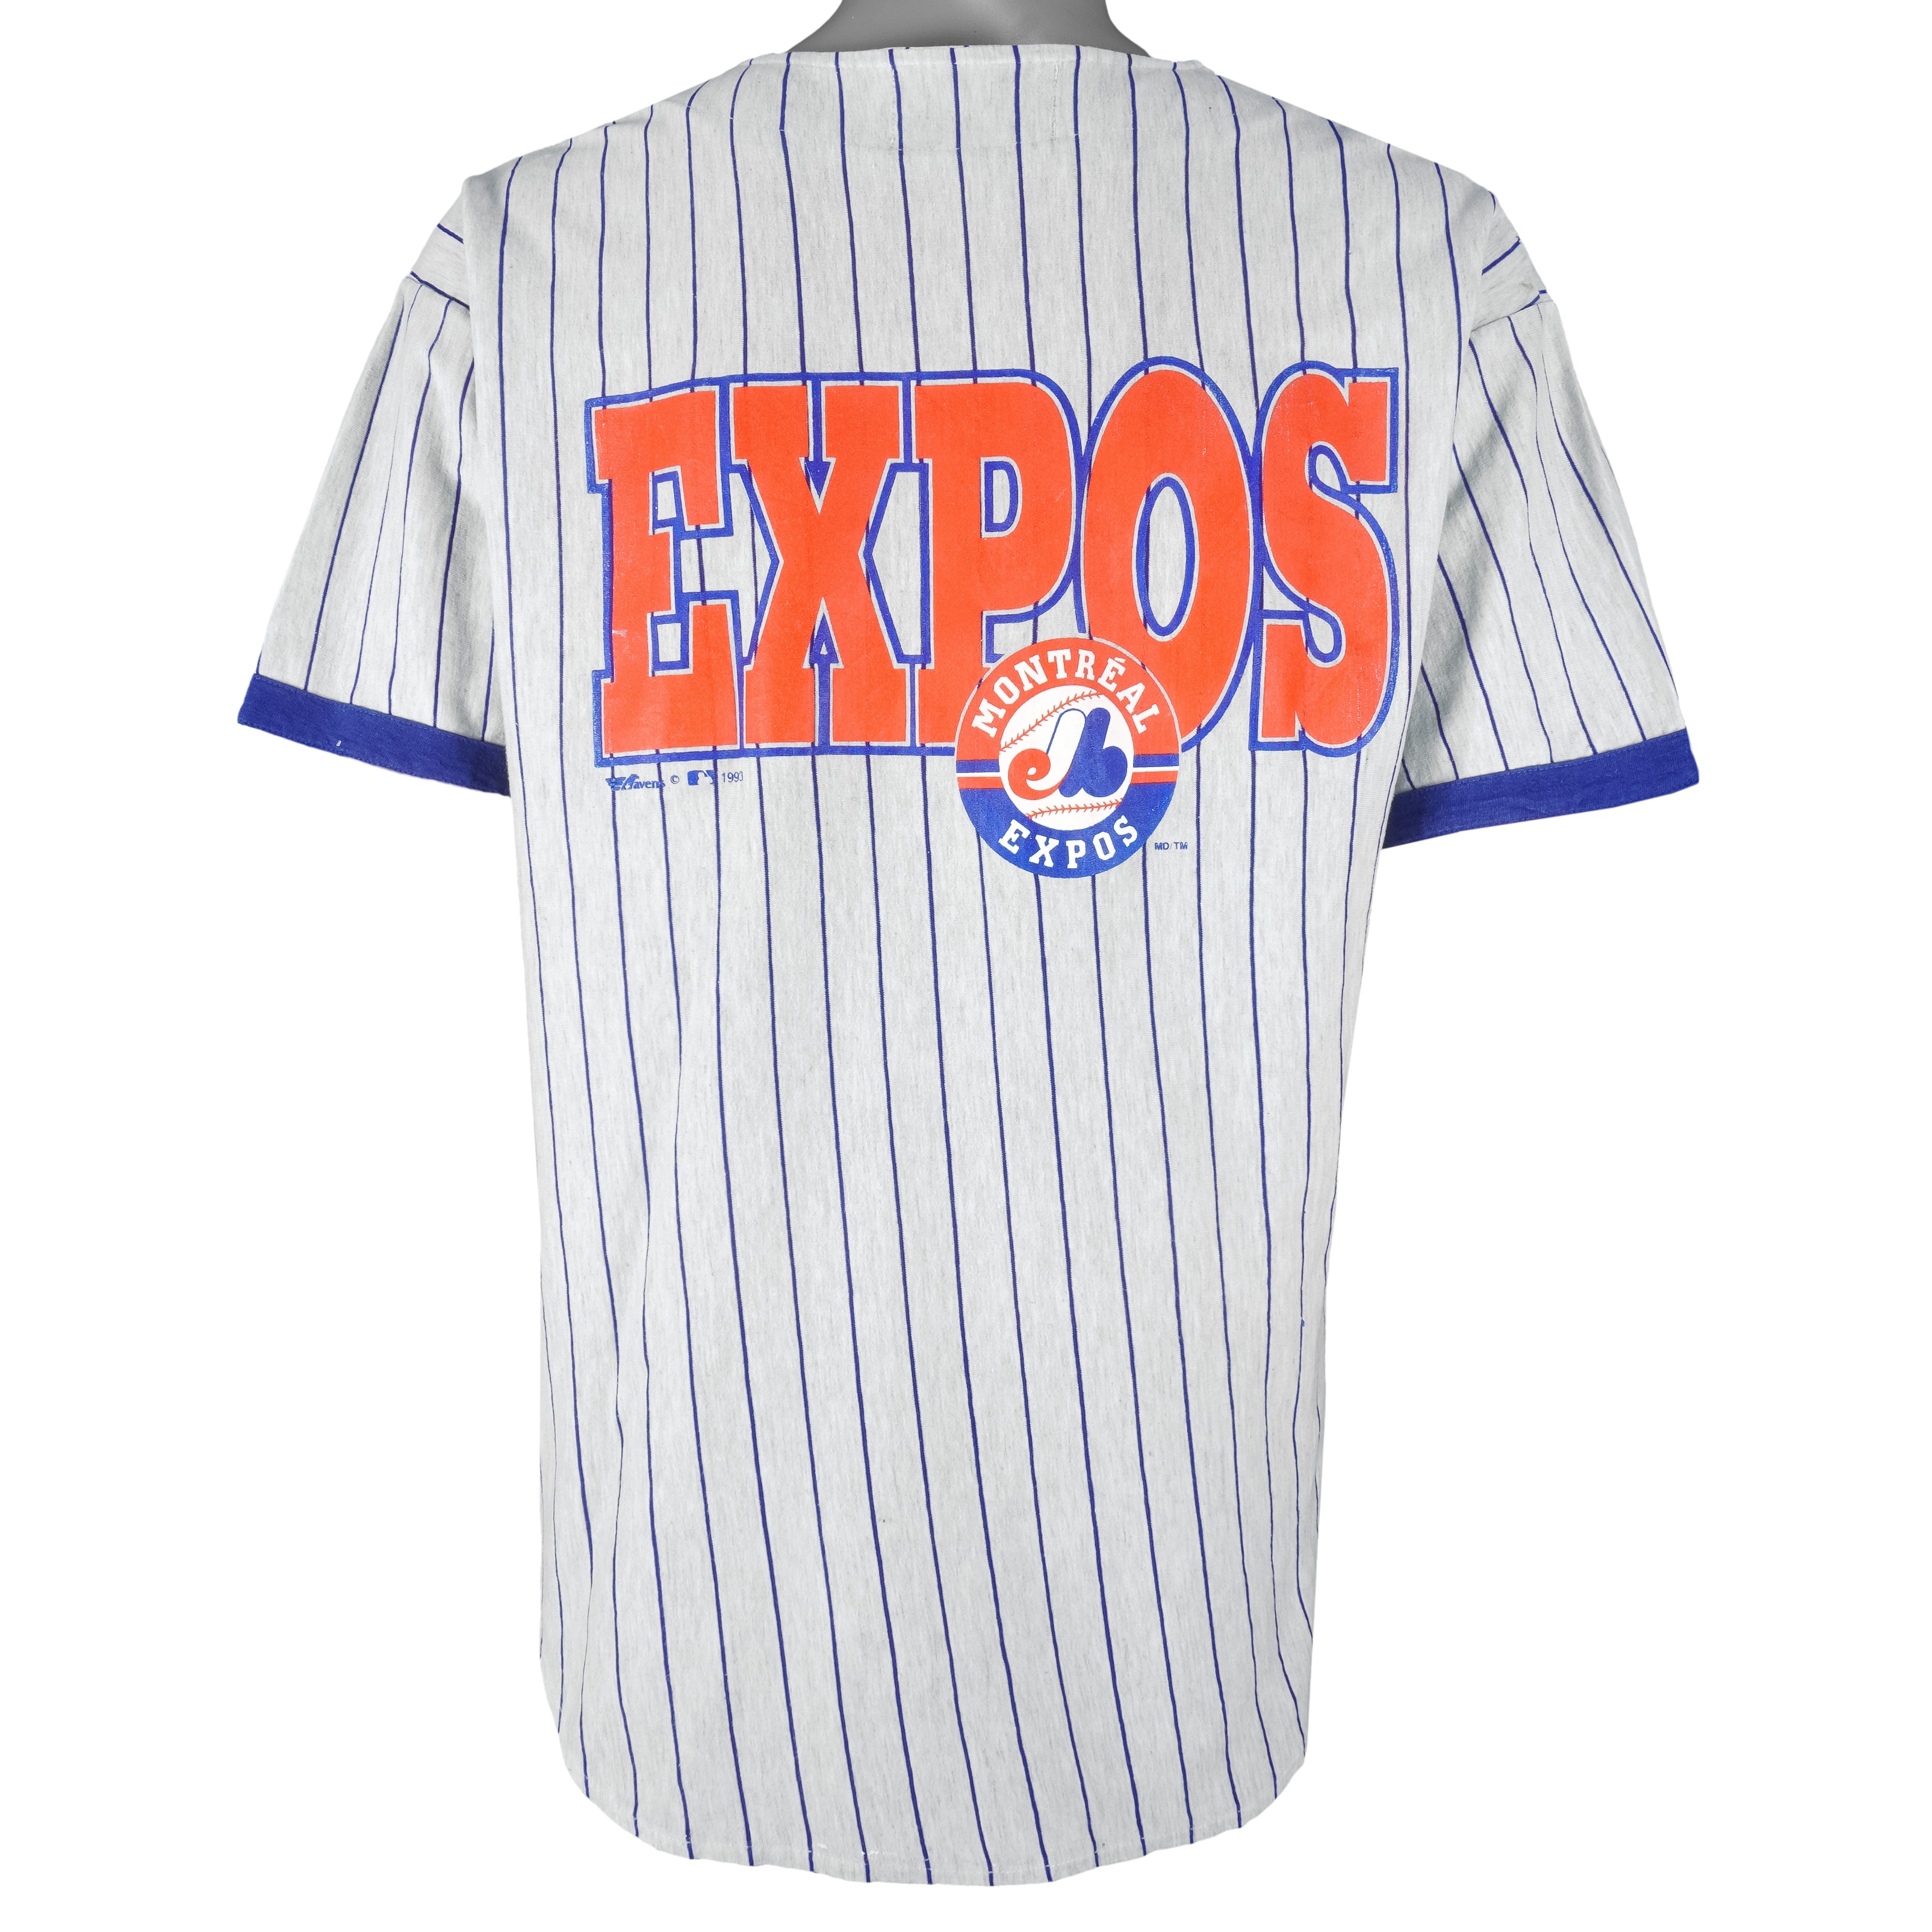 Vintage MLB (Ravens) - Montreal Expos Baseball Jersey T-Shirt 1993